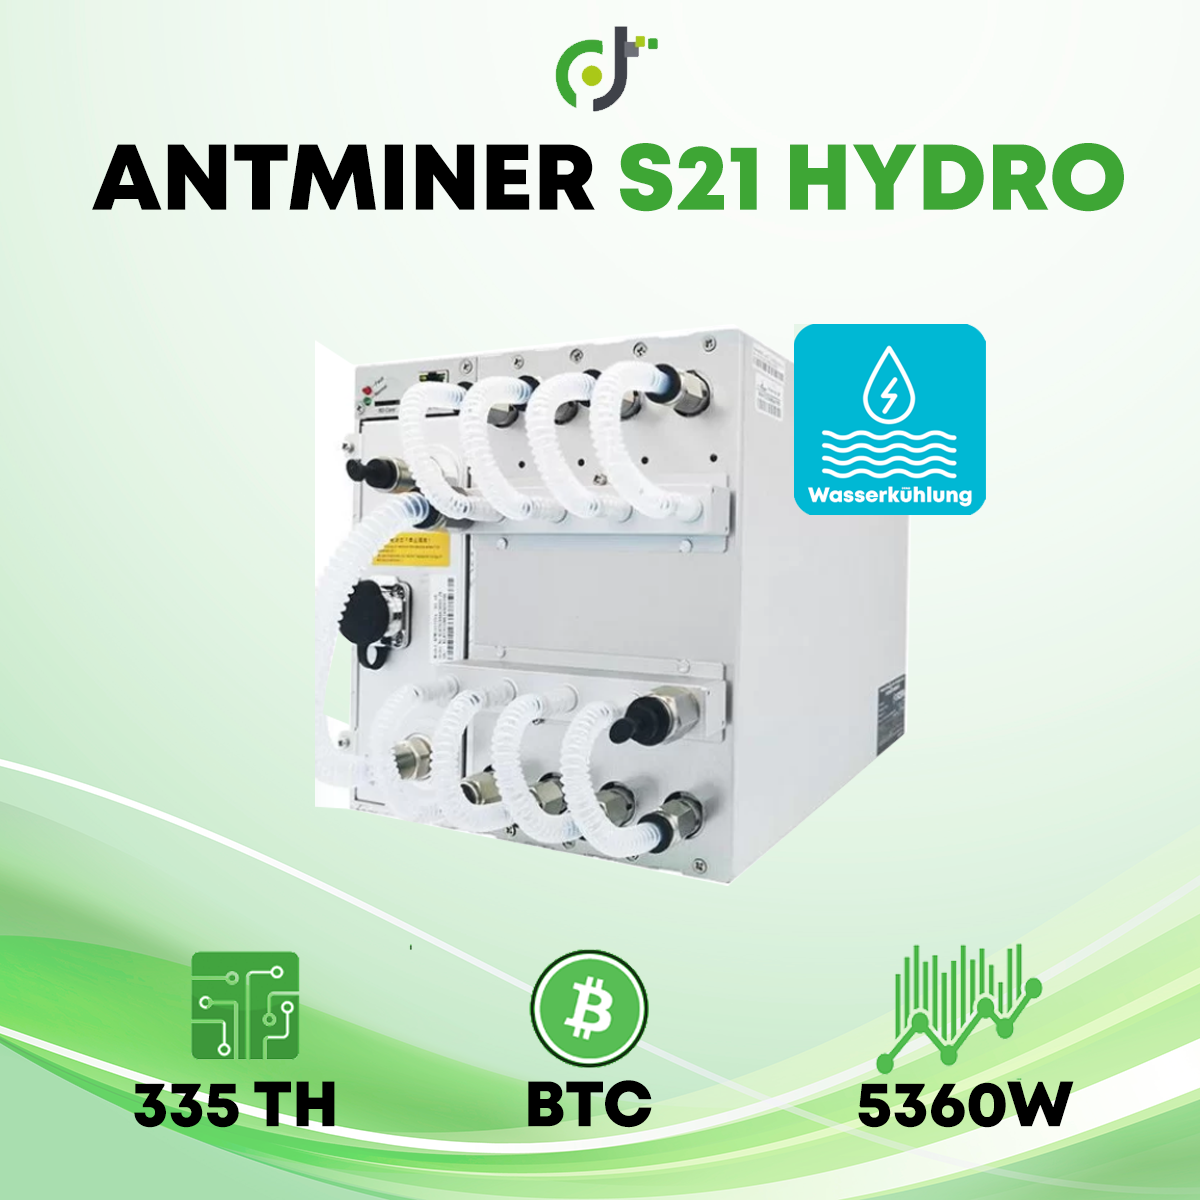 Bitmain Antminer S21 Hydro (335TH) Bitcoin Krypto Asic Miner